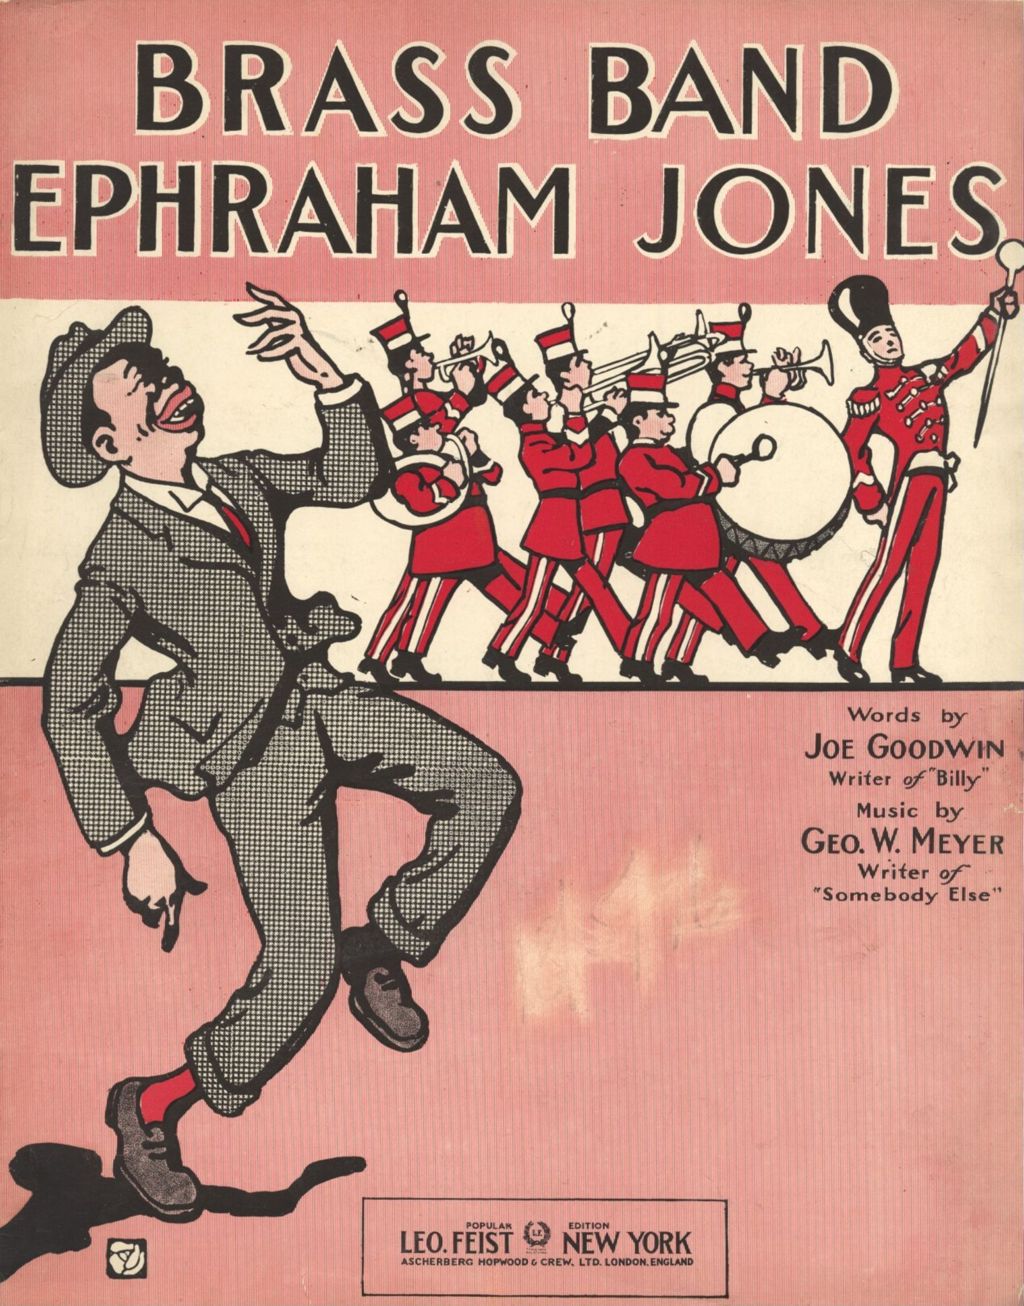 Miniature of Brass Band Ephraham Jones